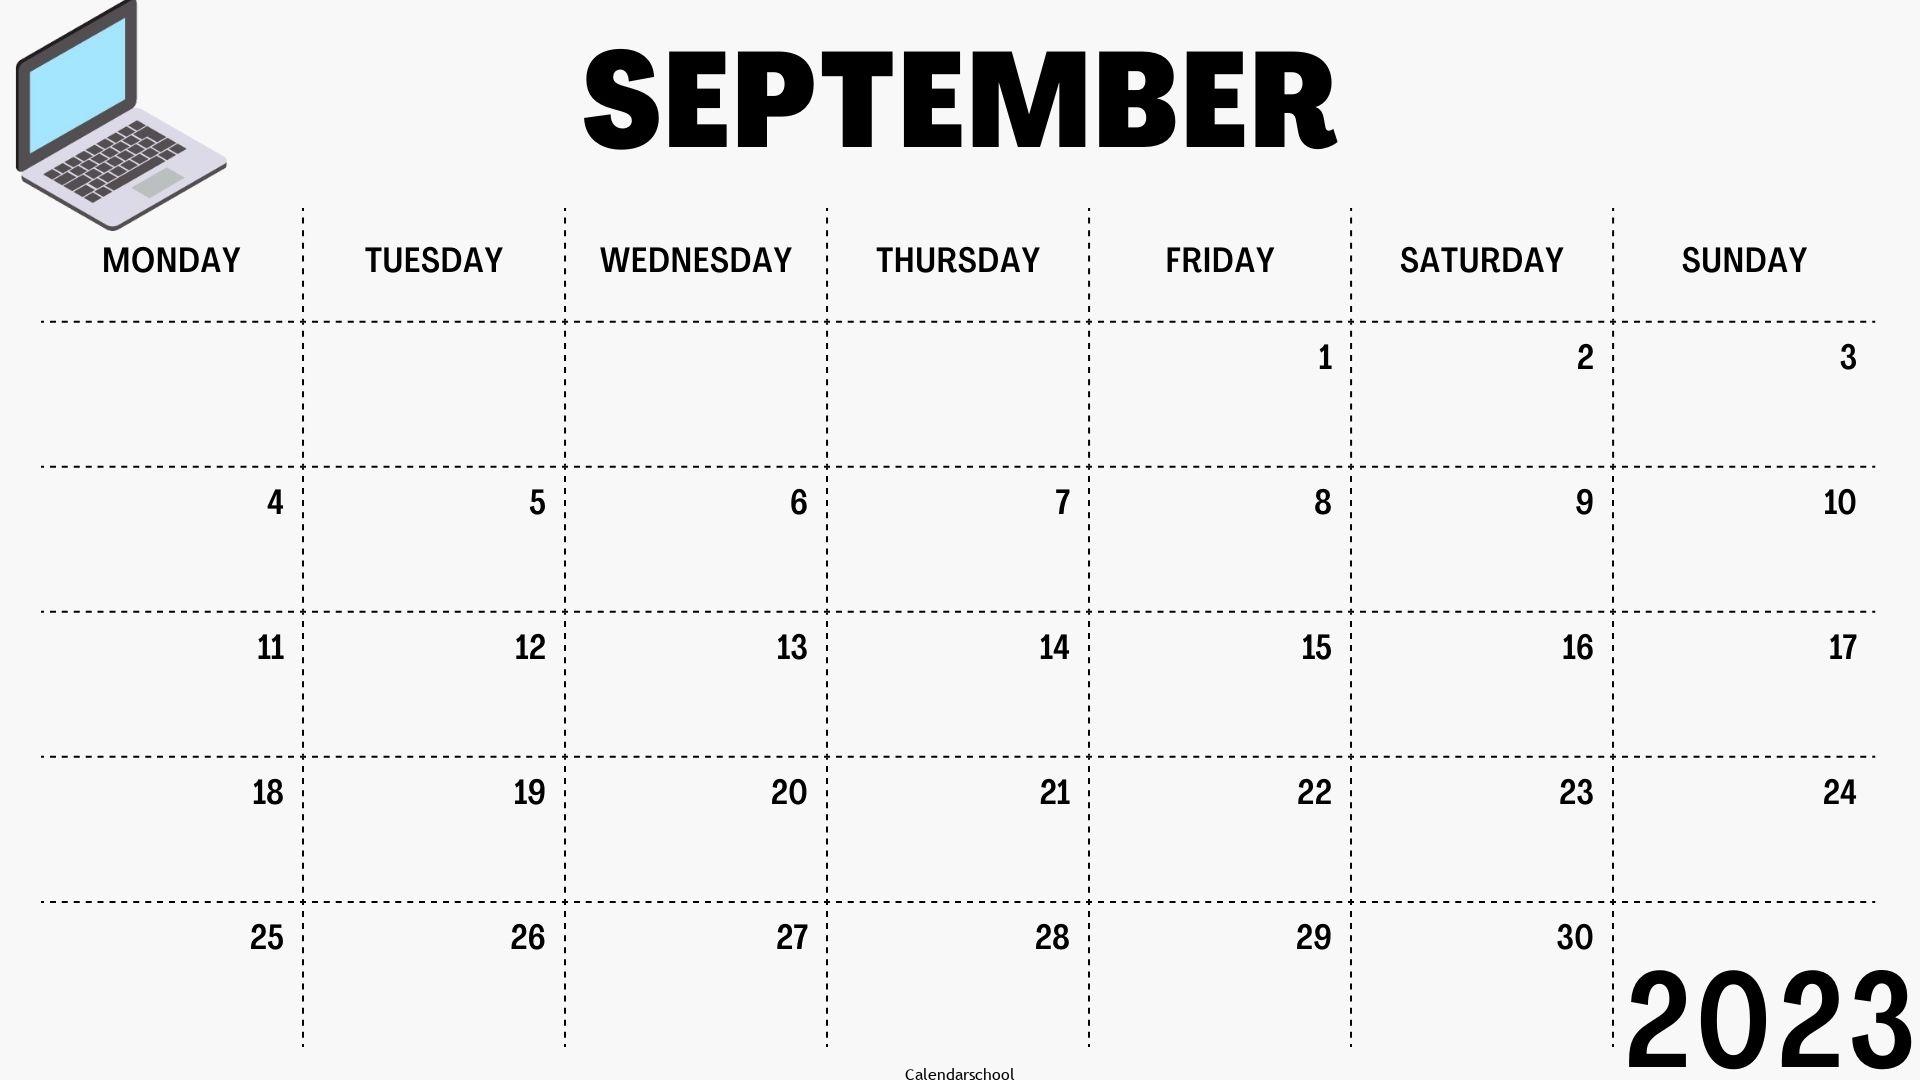 September 2023 Printable Calendar By Month